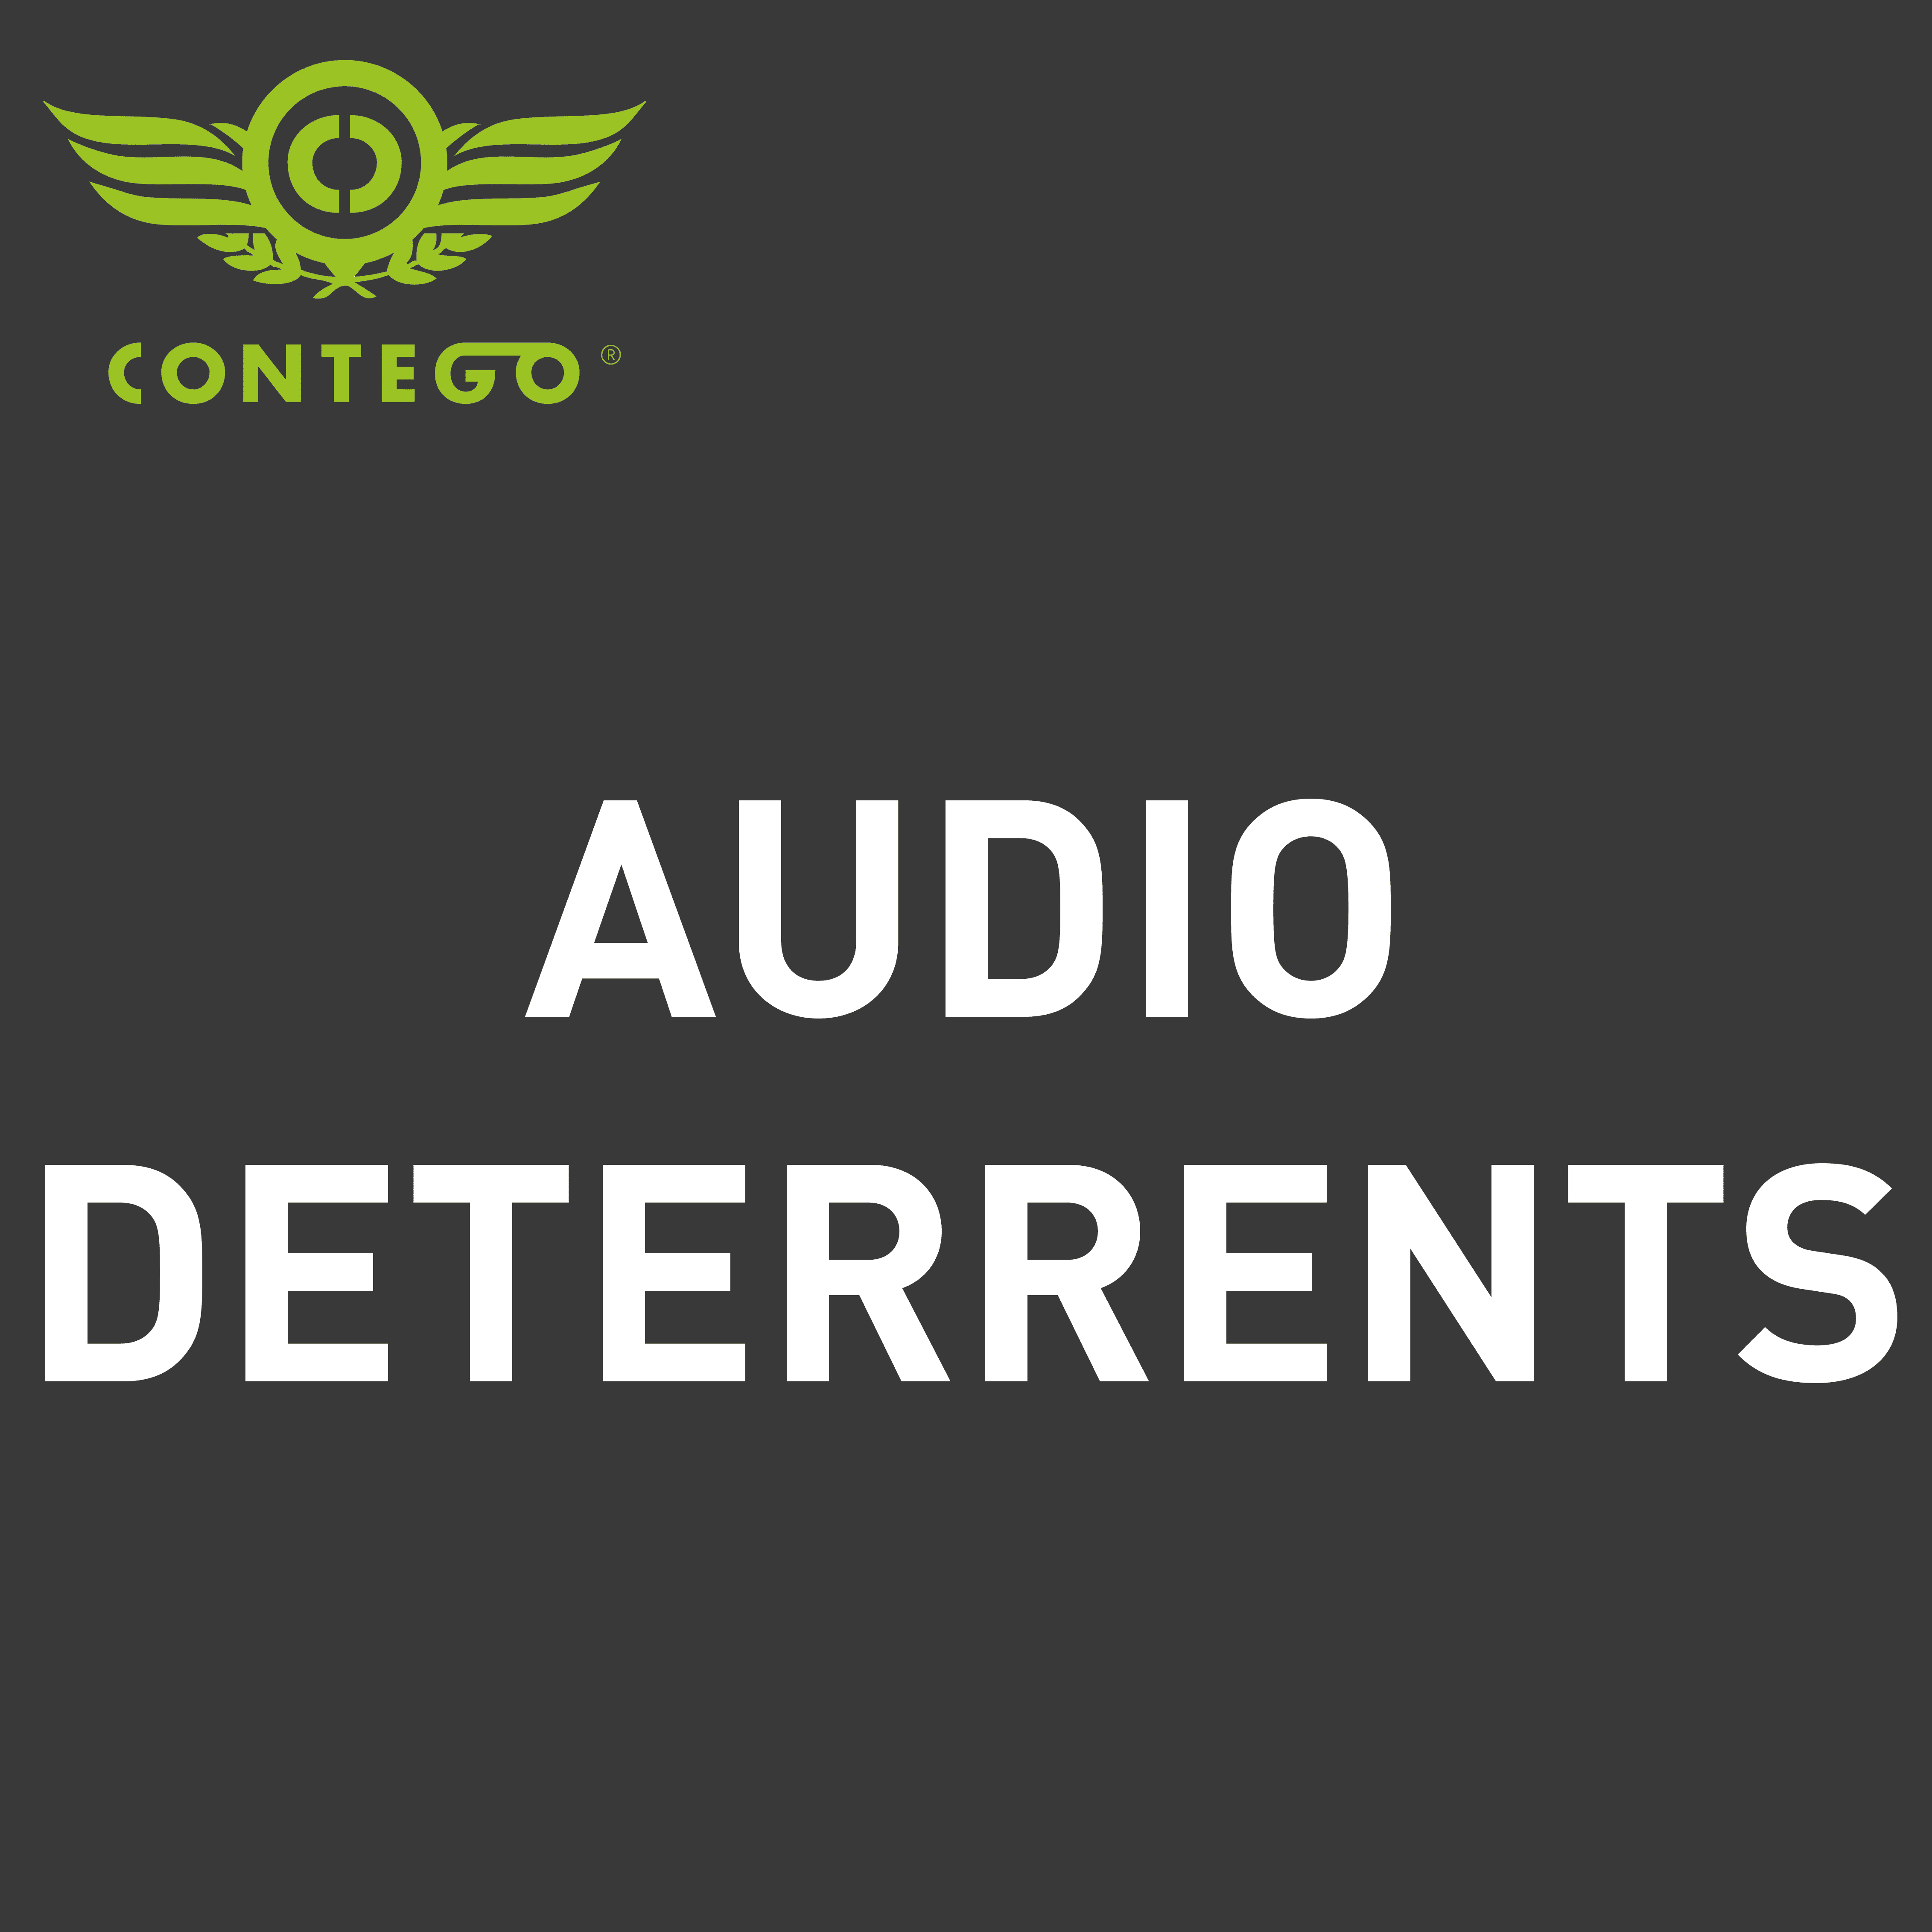 Audio deterrents